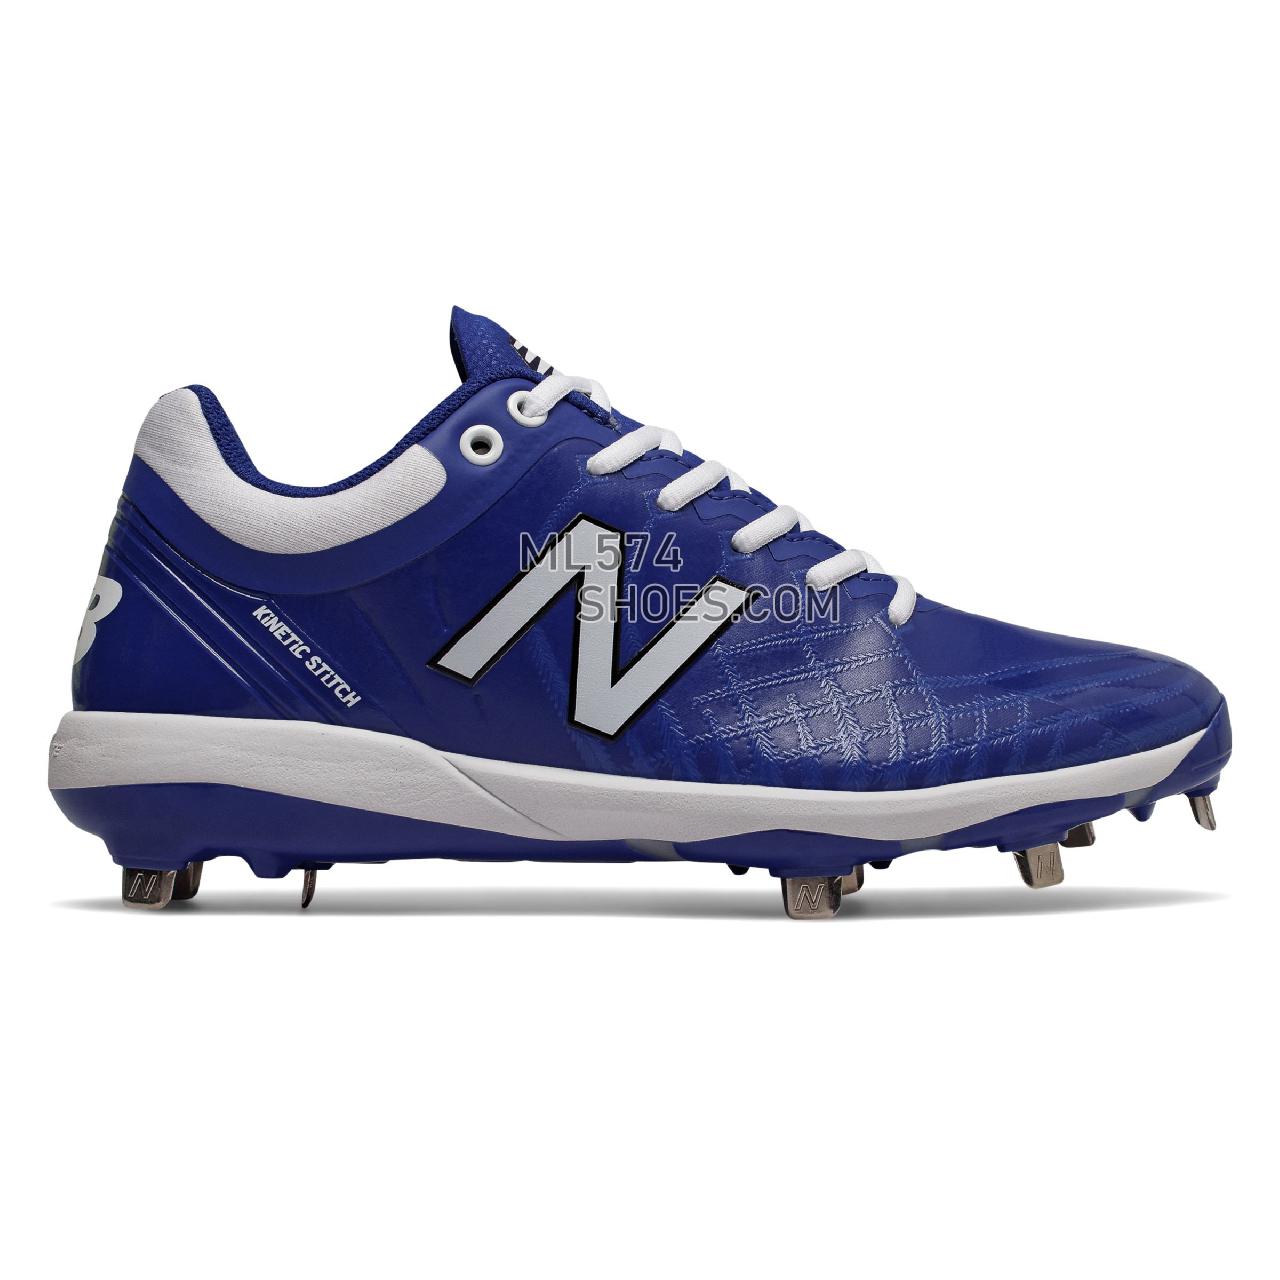 New Balance 4040v5 Metal - Men's Baseball Turf - Royal Blue with White - L4040TB5